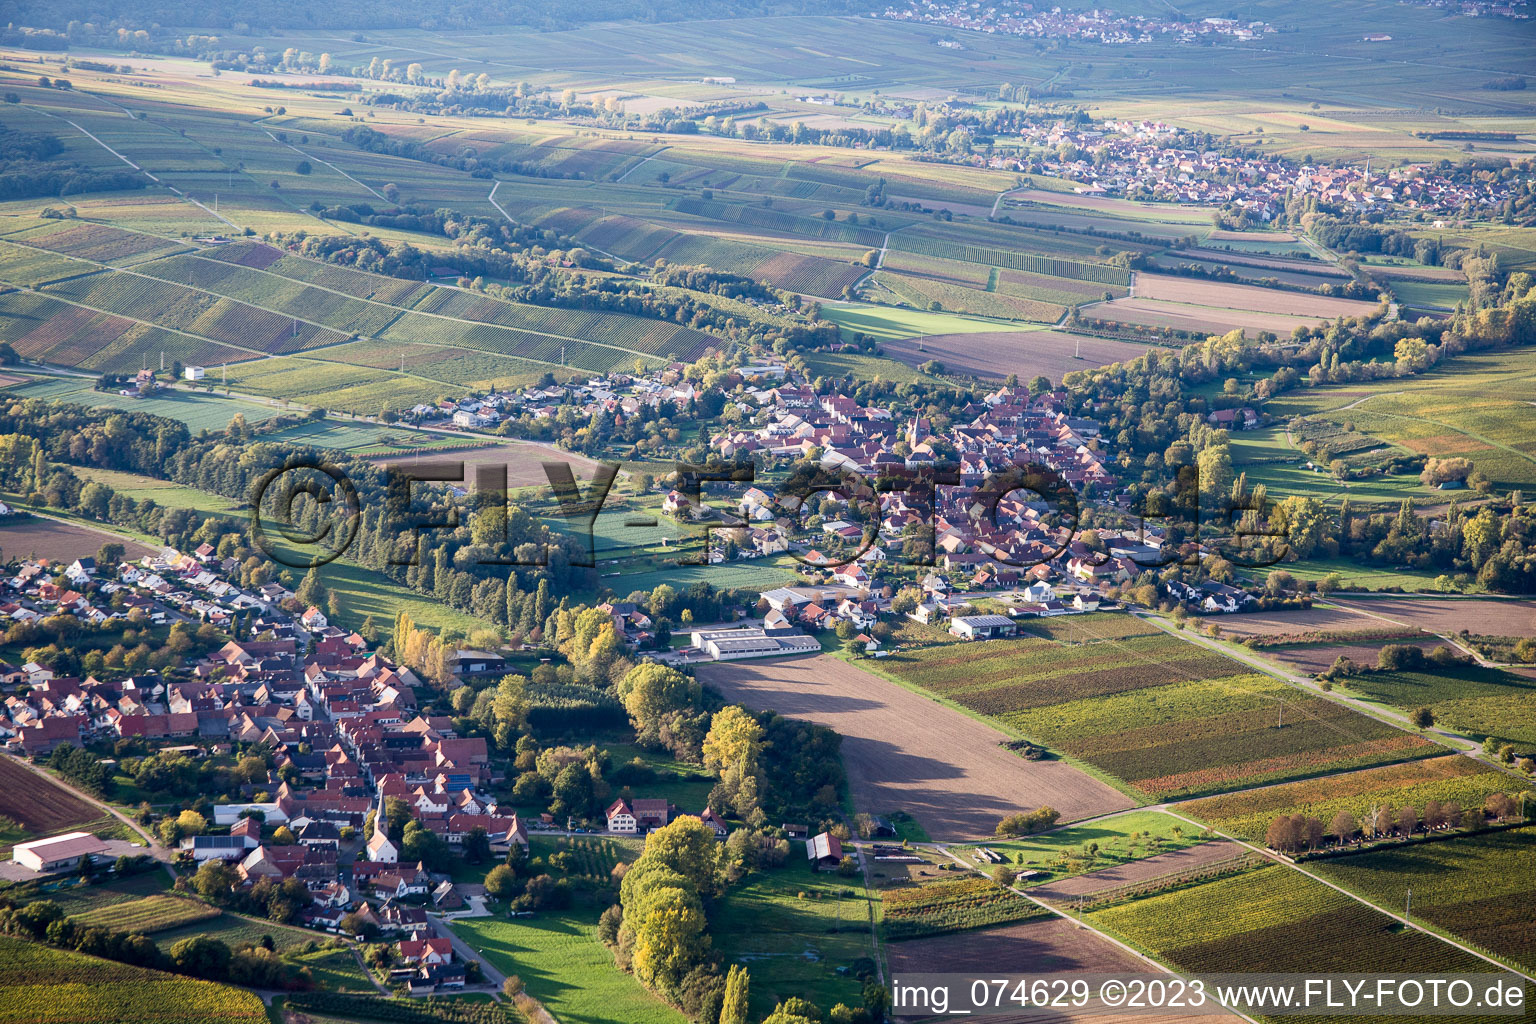 Aerial photograpy of District Billigheim in Billigheim-Ingenheim in the state Rhineland-Palatinate, Germany